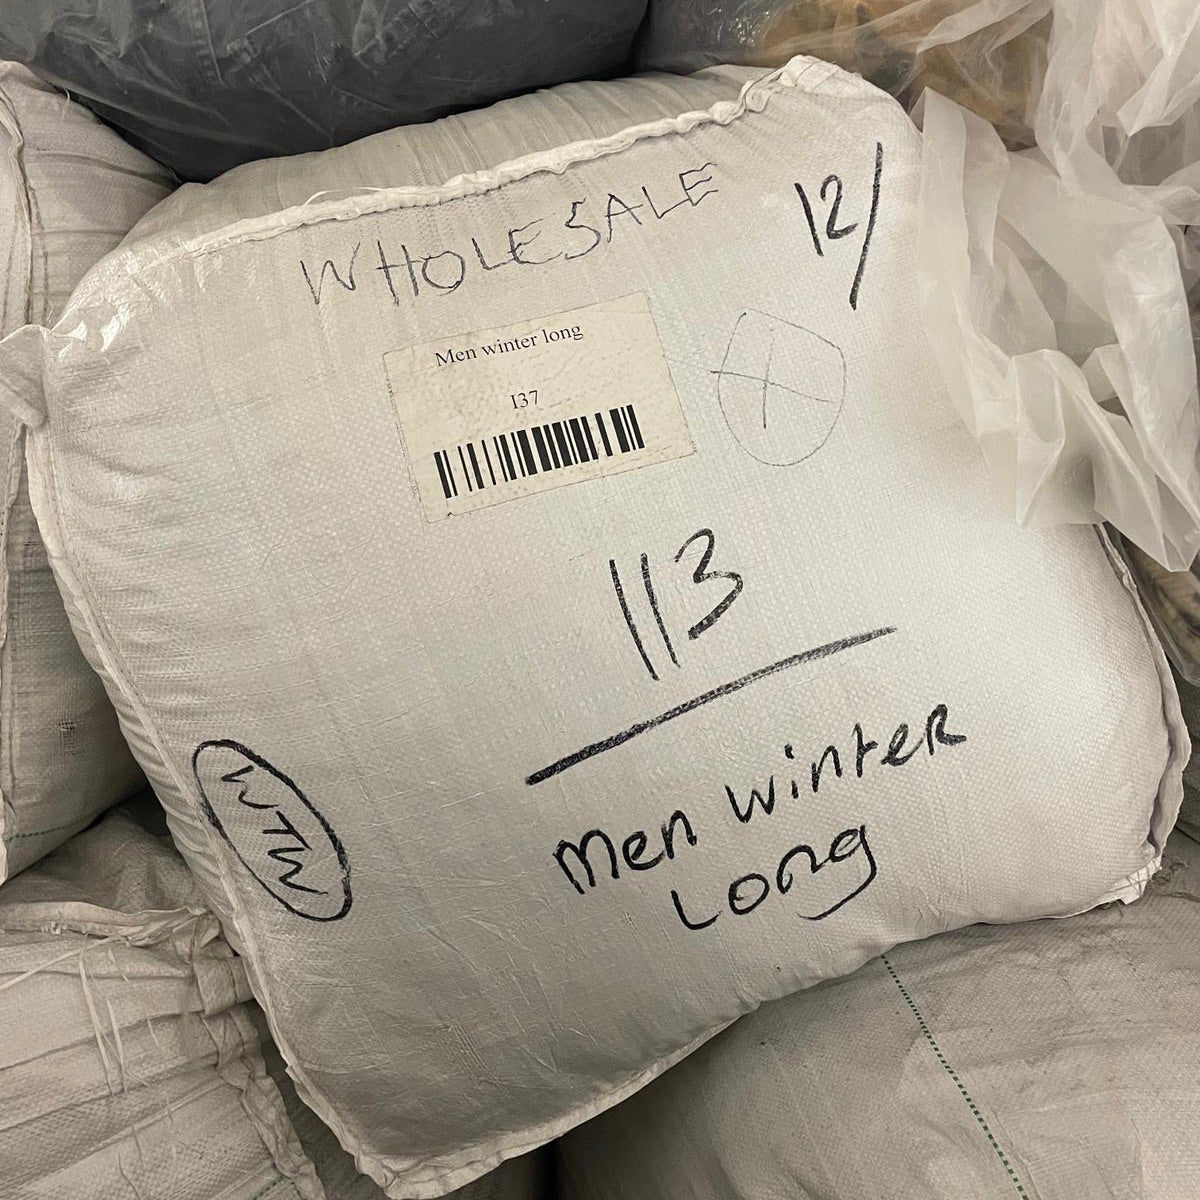 Mens Winter Coat 111kg / 113kg (Unopened Bale Wholesale)